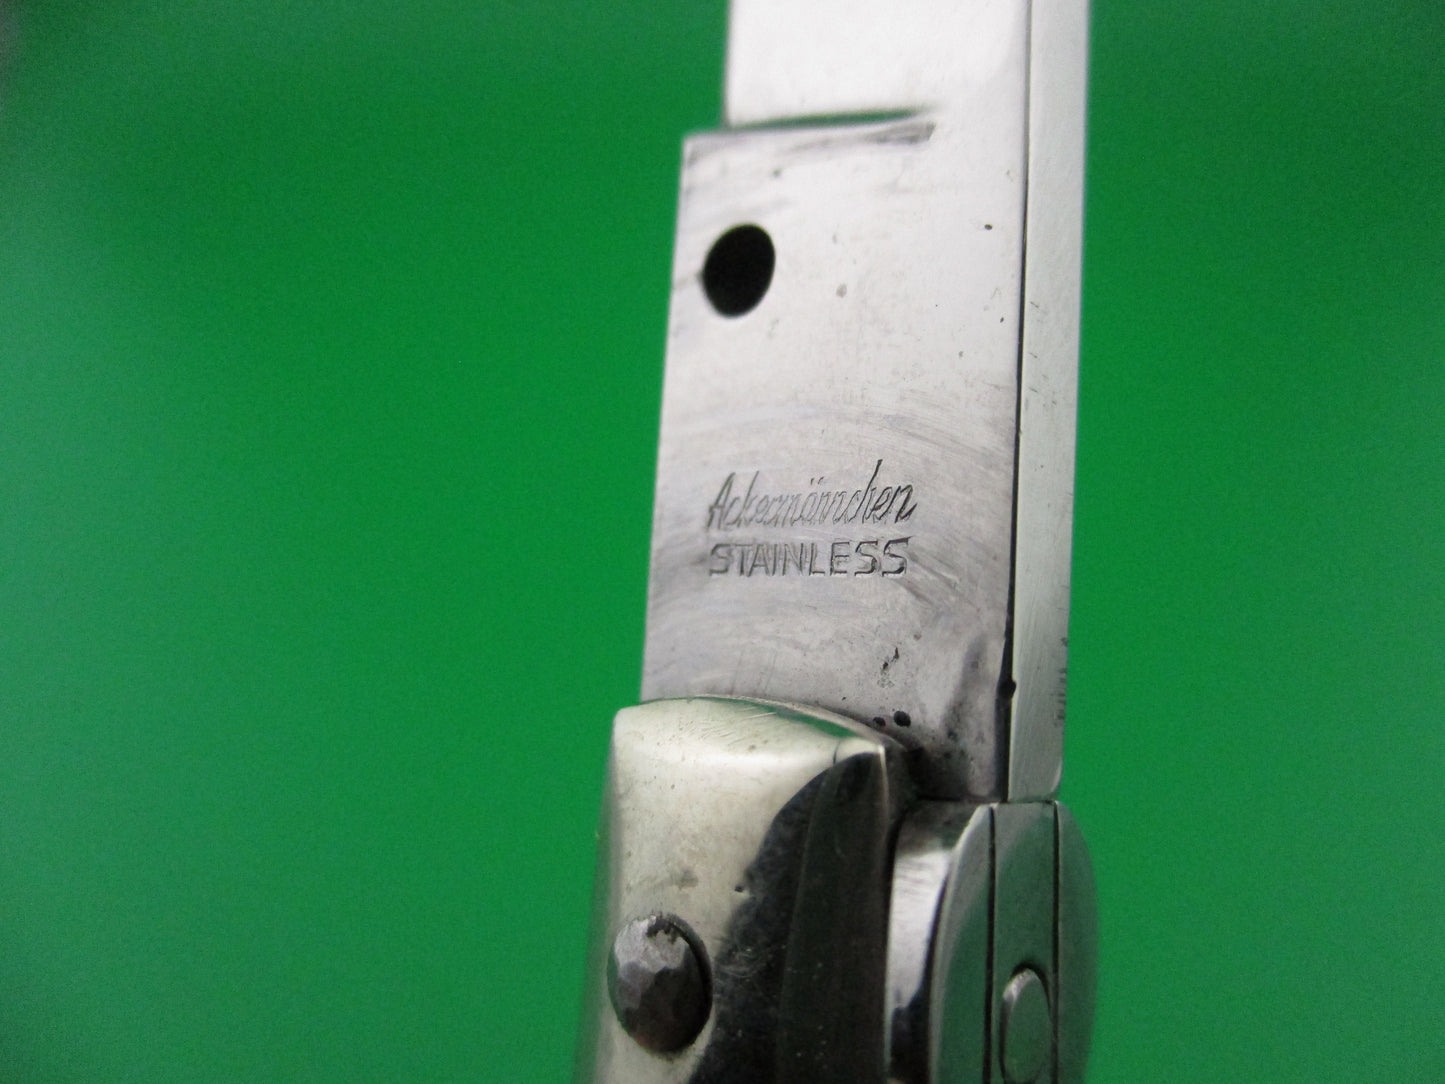 Ackermannchen 21cm Vintage 1950s Italian Picklock switchblade knife